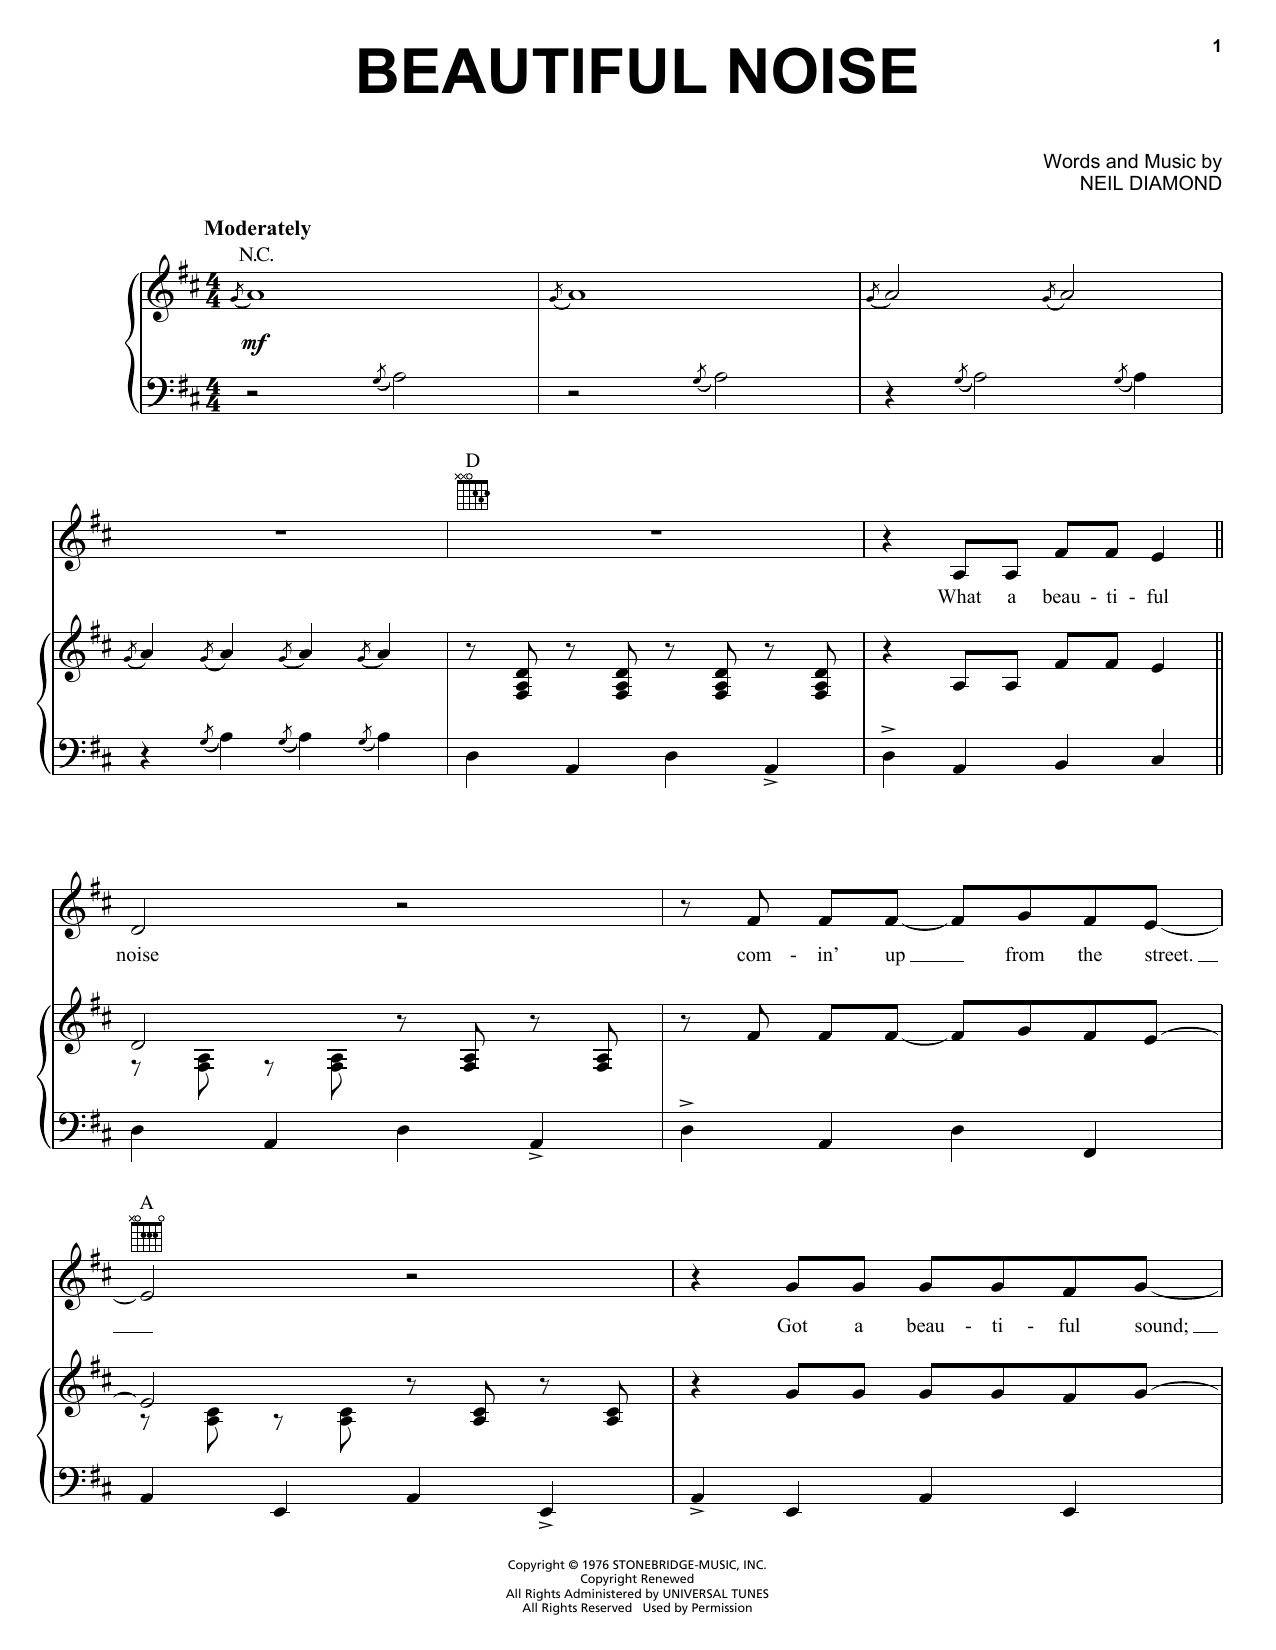 Neil Diamond Beautiful Noise Sheet Music Notes & Chords for Ukulele - Download or Print PDF